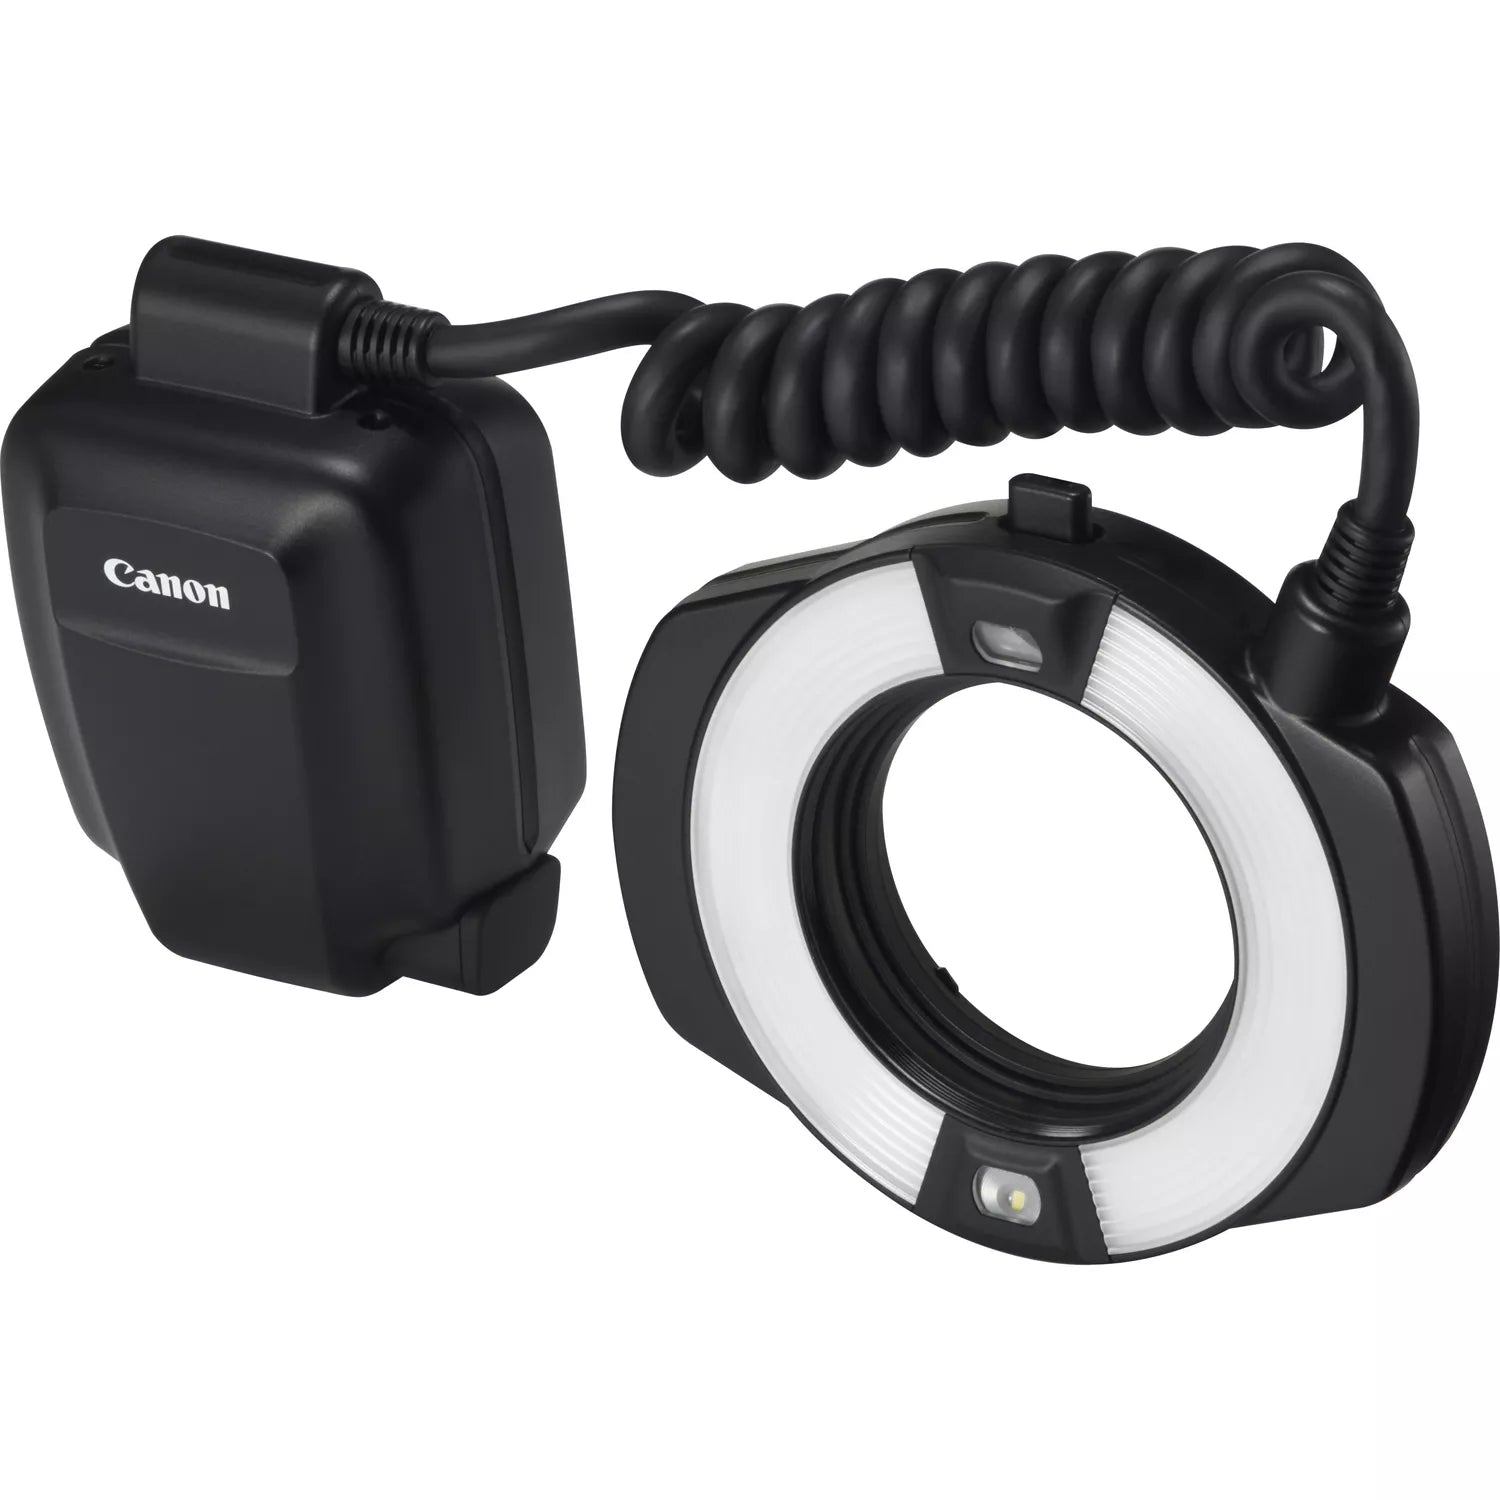 Canon Flash Macro Ring Lite Speedlite MR-14EXII